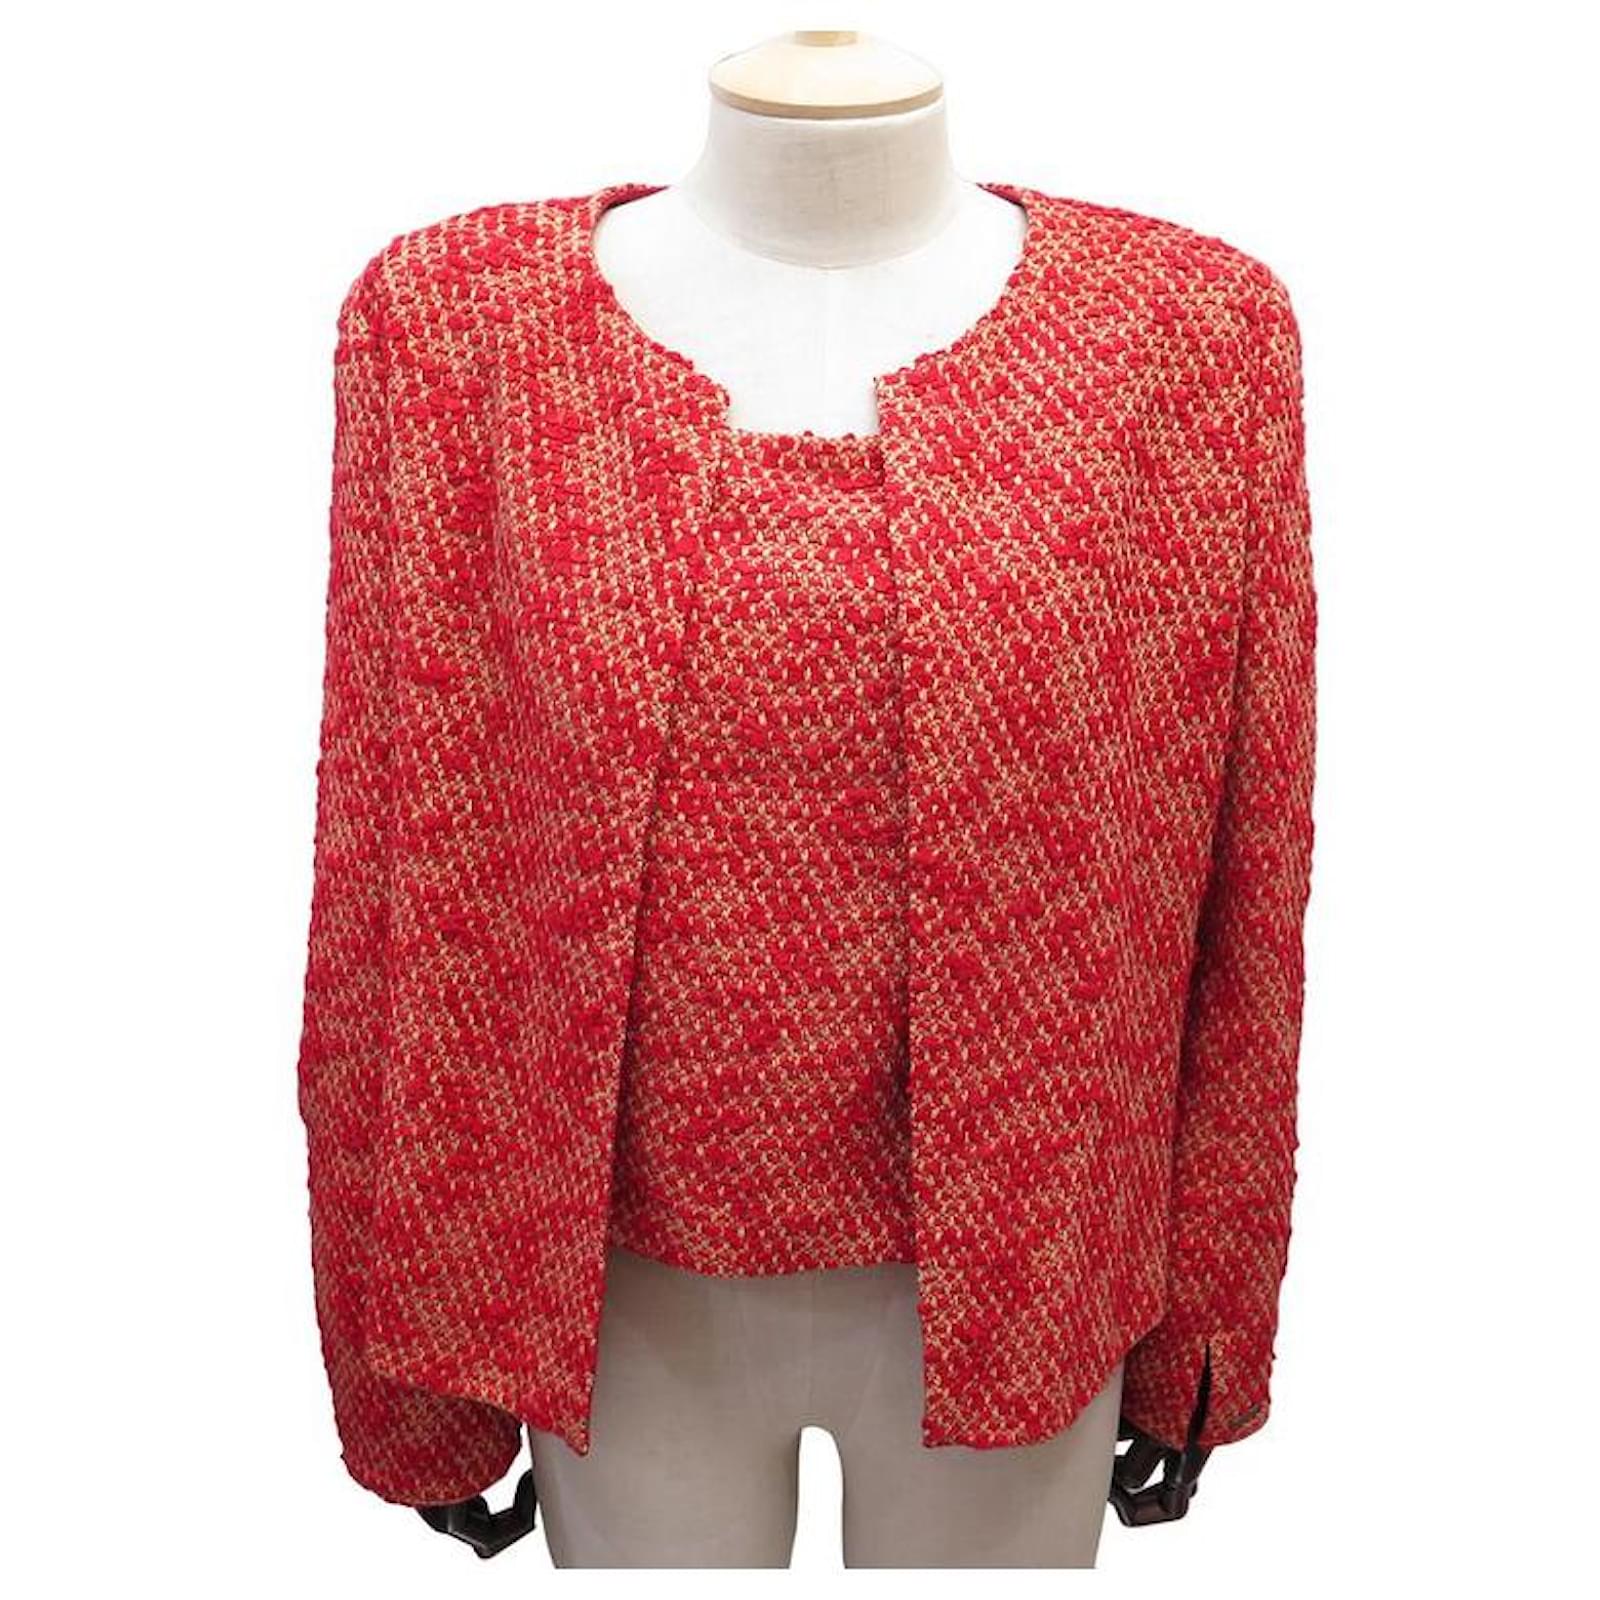 Jackets Chanel Vintage Chanel Jacket + Top Red Tweed SET14318W02562 38 M Set